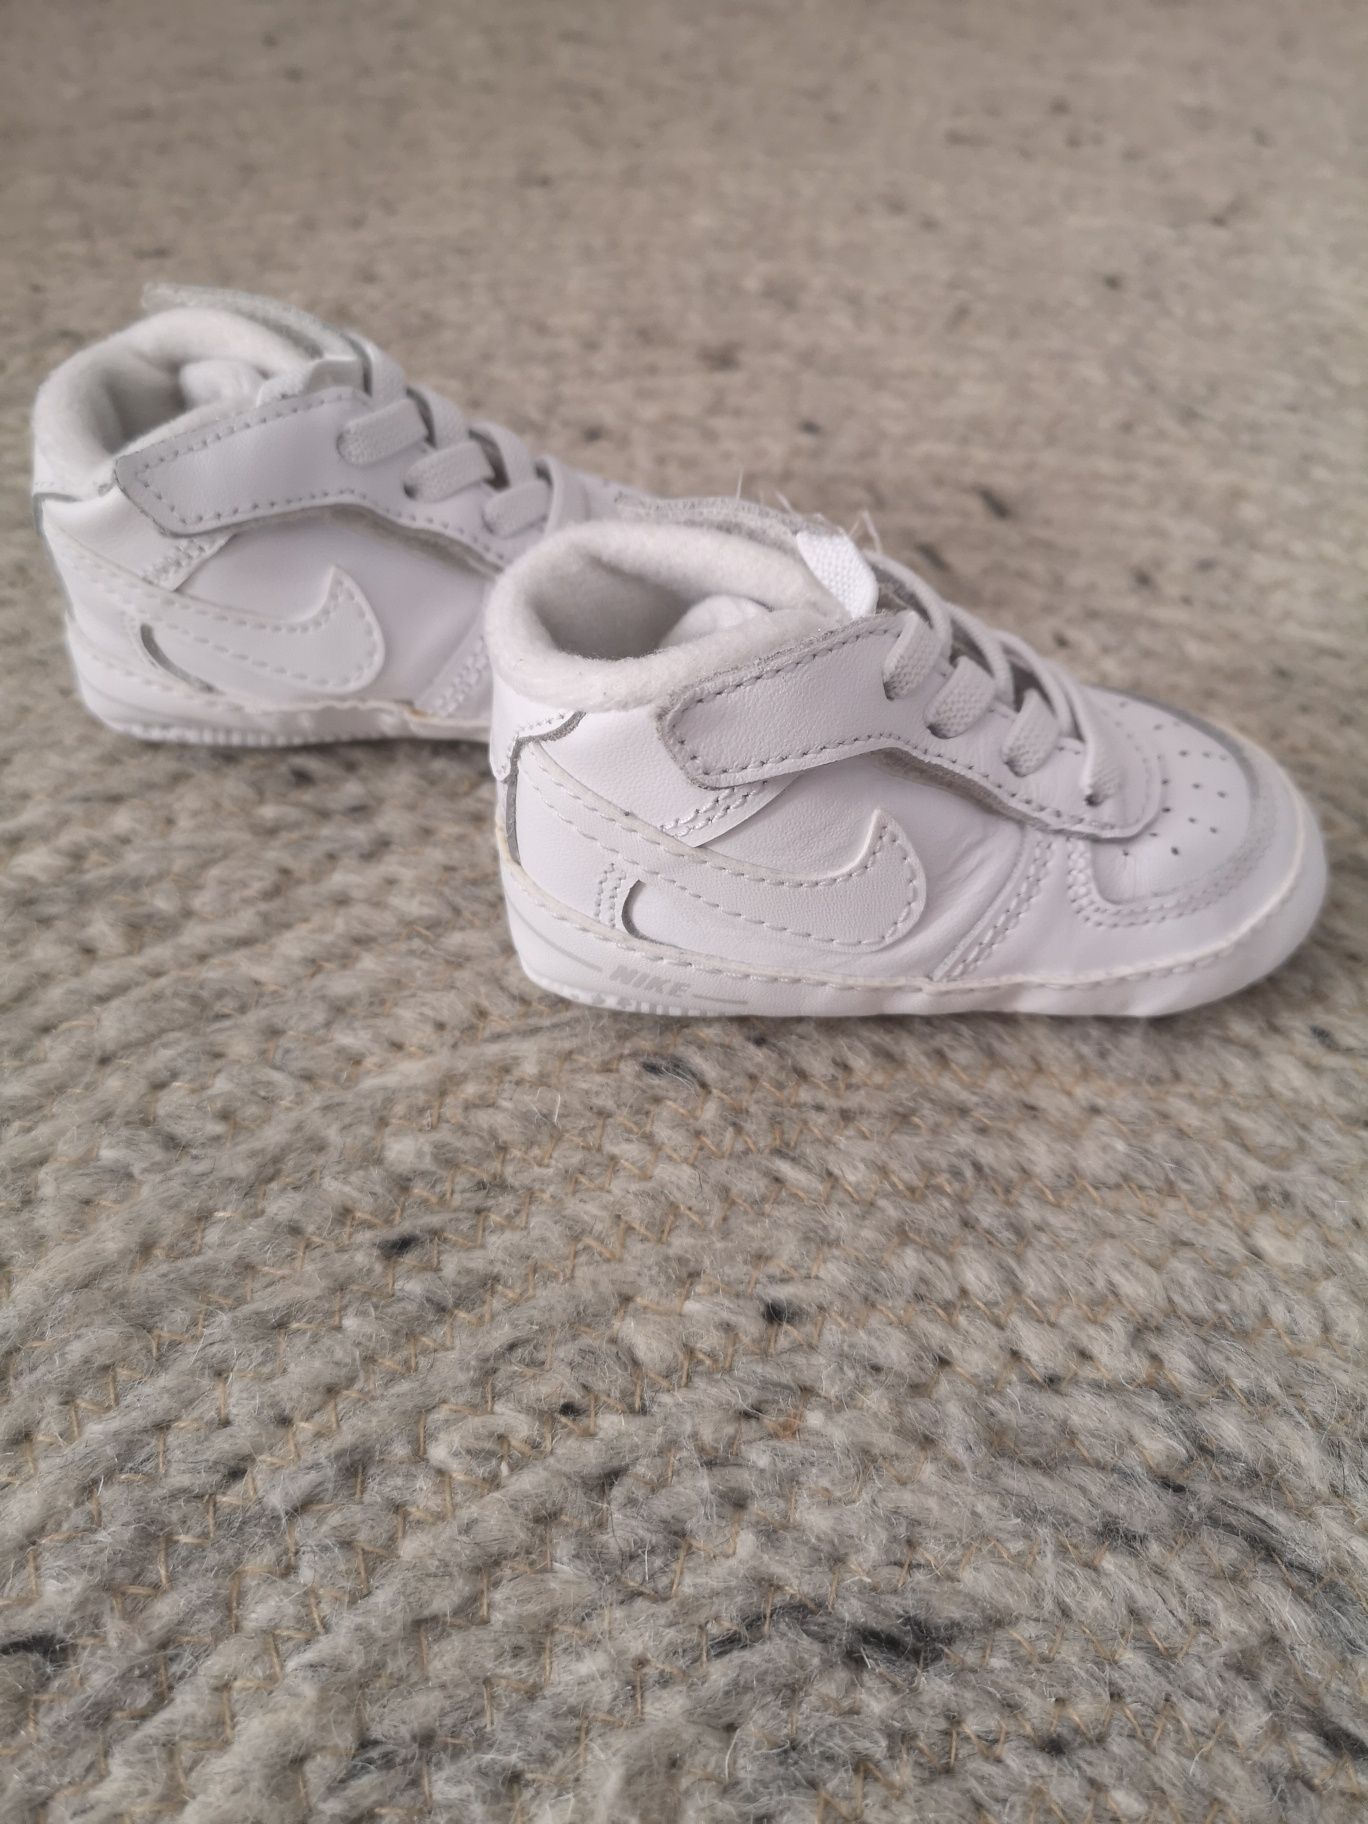 Adidasi/pantofi sport Nike pentru bebelusi marimea 18.5, 9 cm